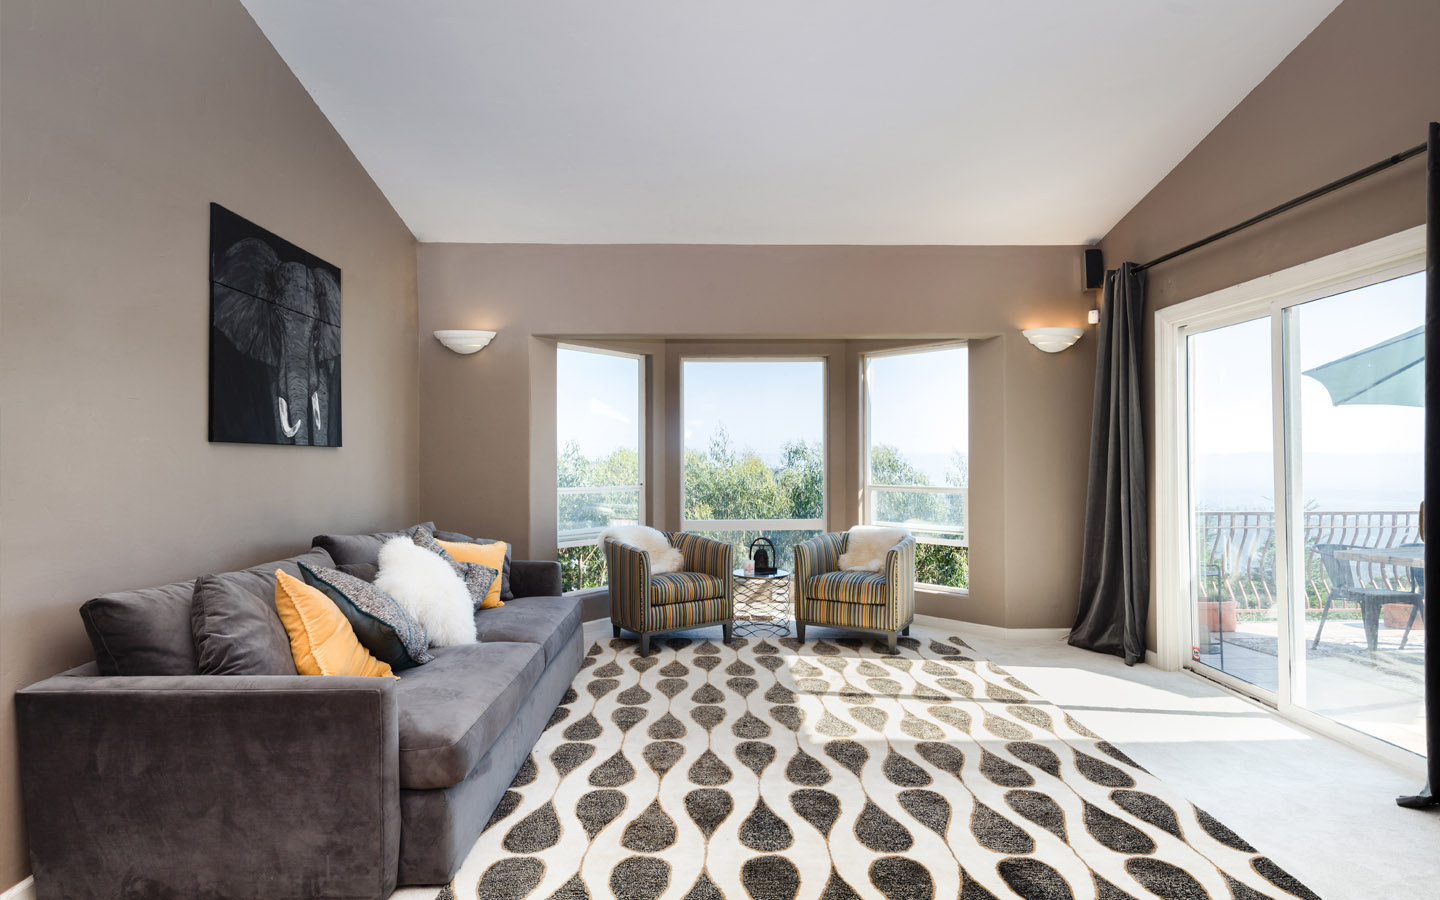 luxury room with large rug